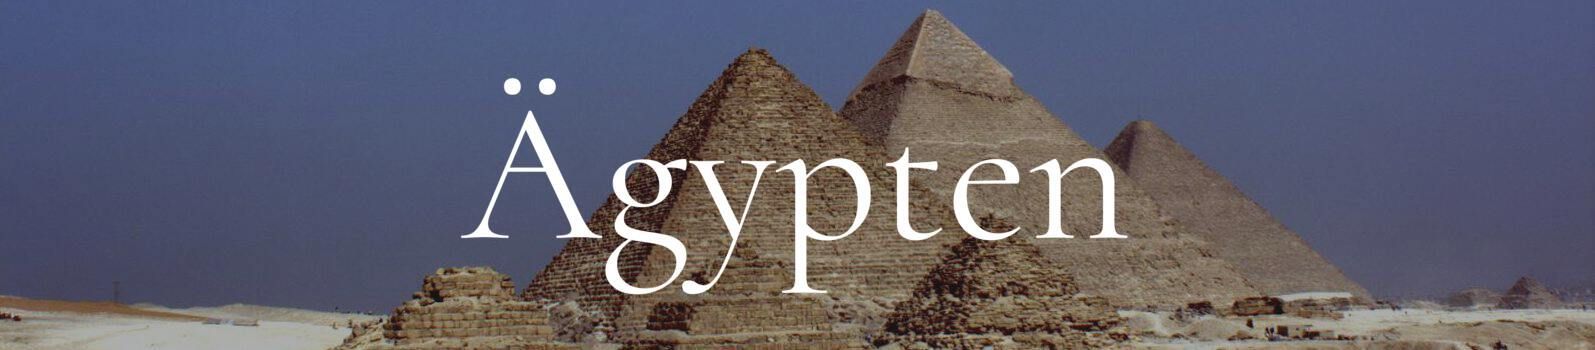 Banner Ägypten Pyramiden